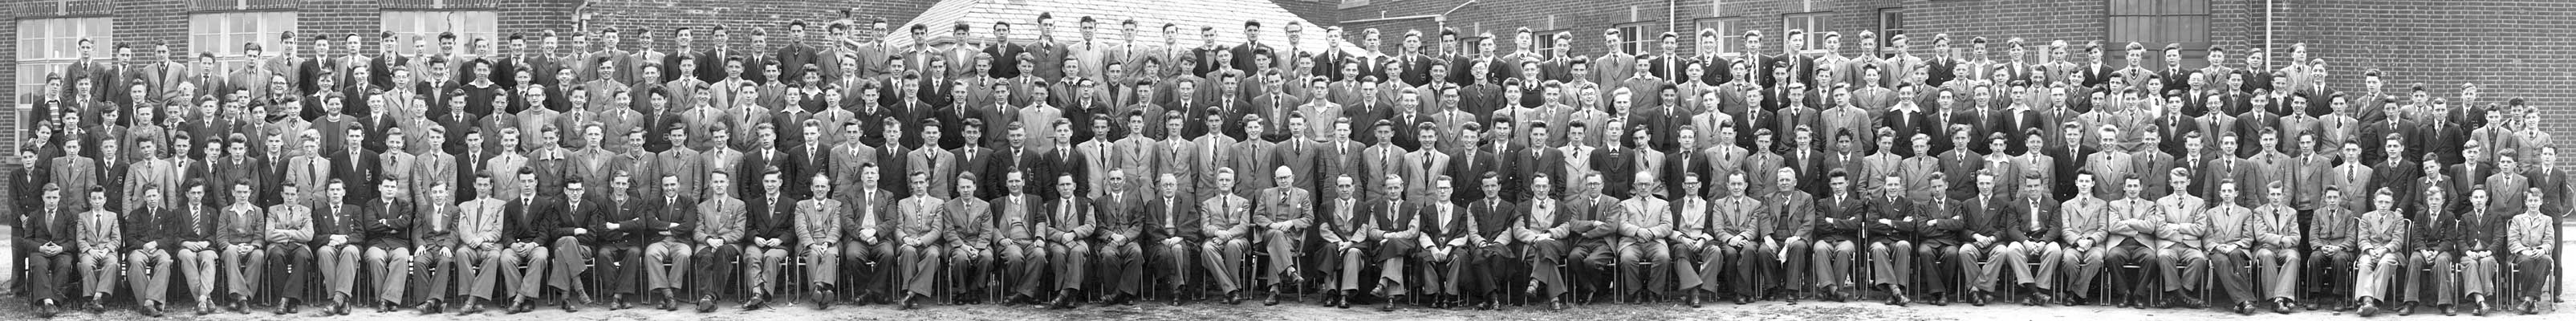 1954/5 - Seniors